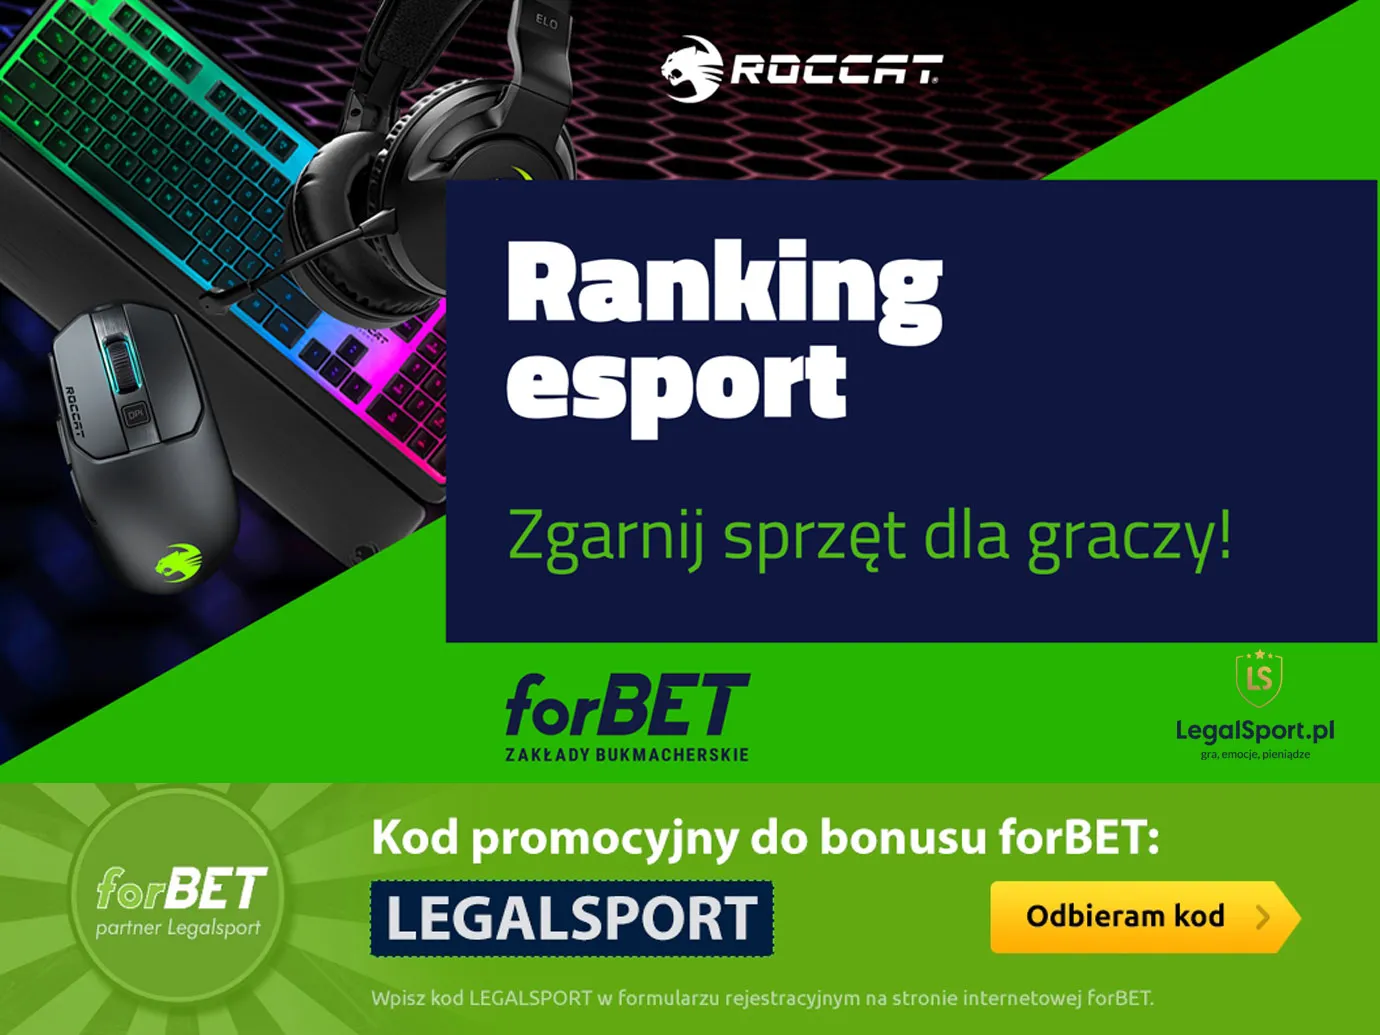 Ranking esport w forBET - jak wygrać bonus 10 000 PLN